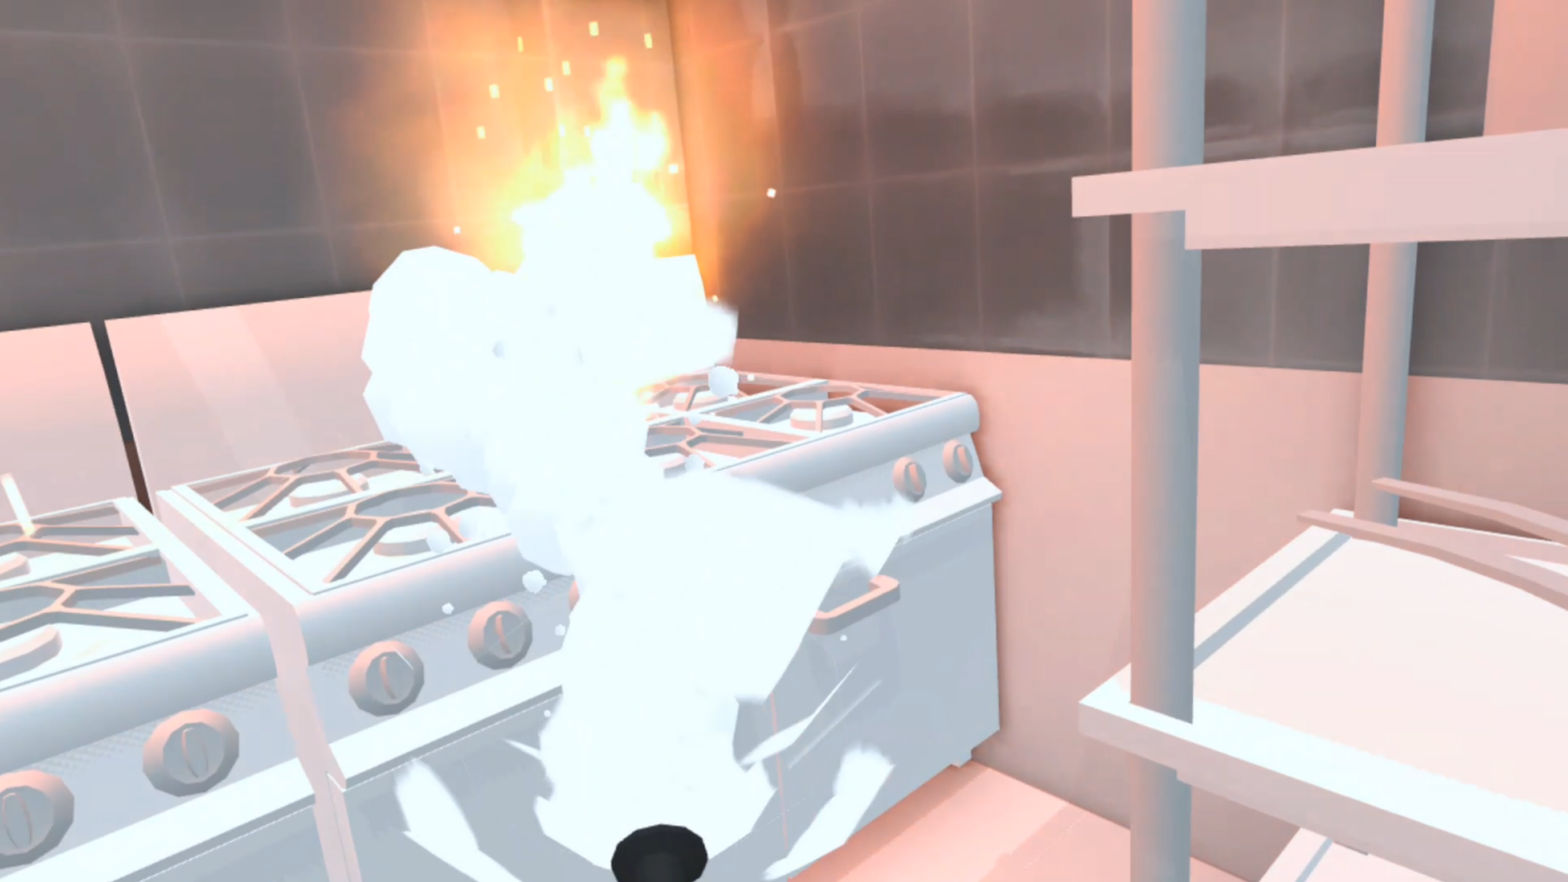 Fire Extinguisher VR